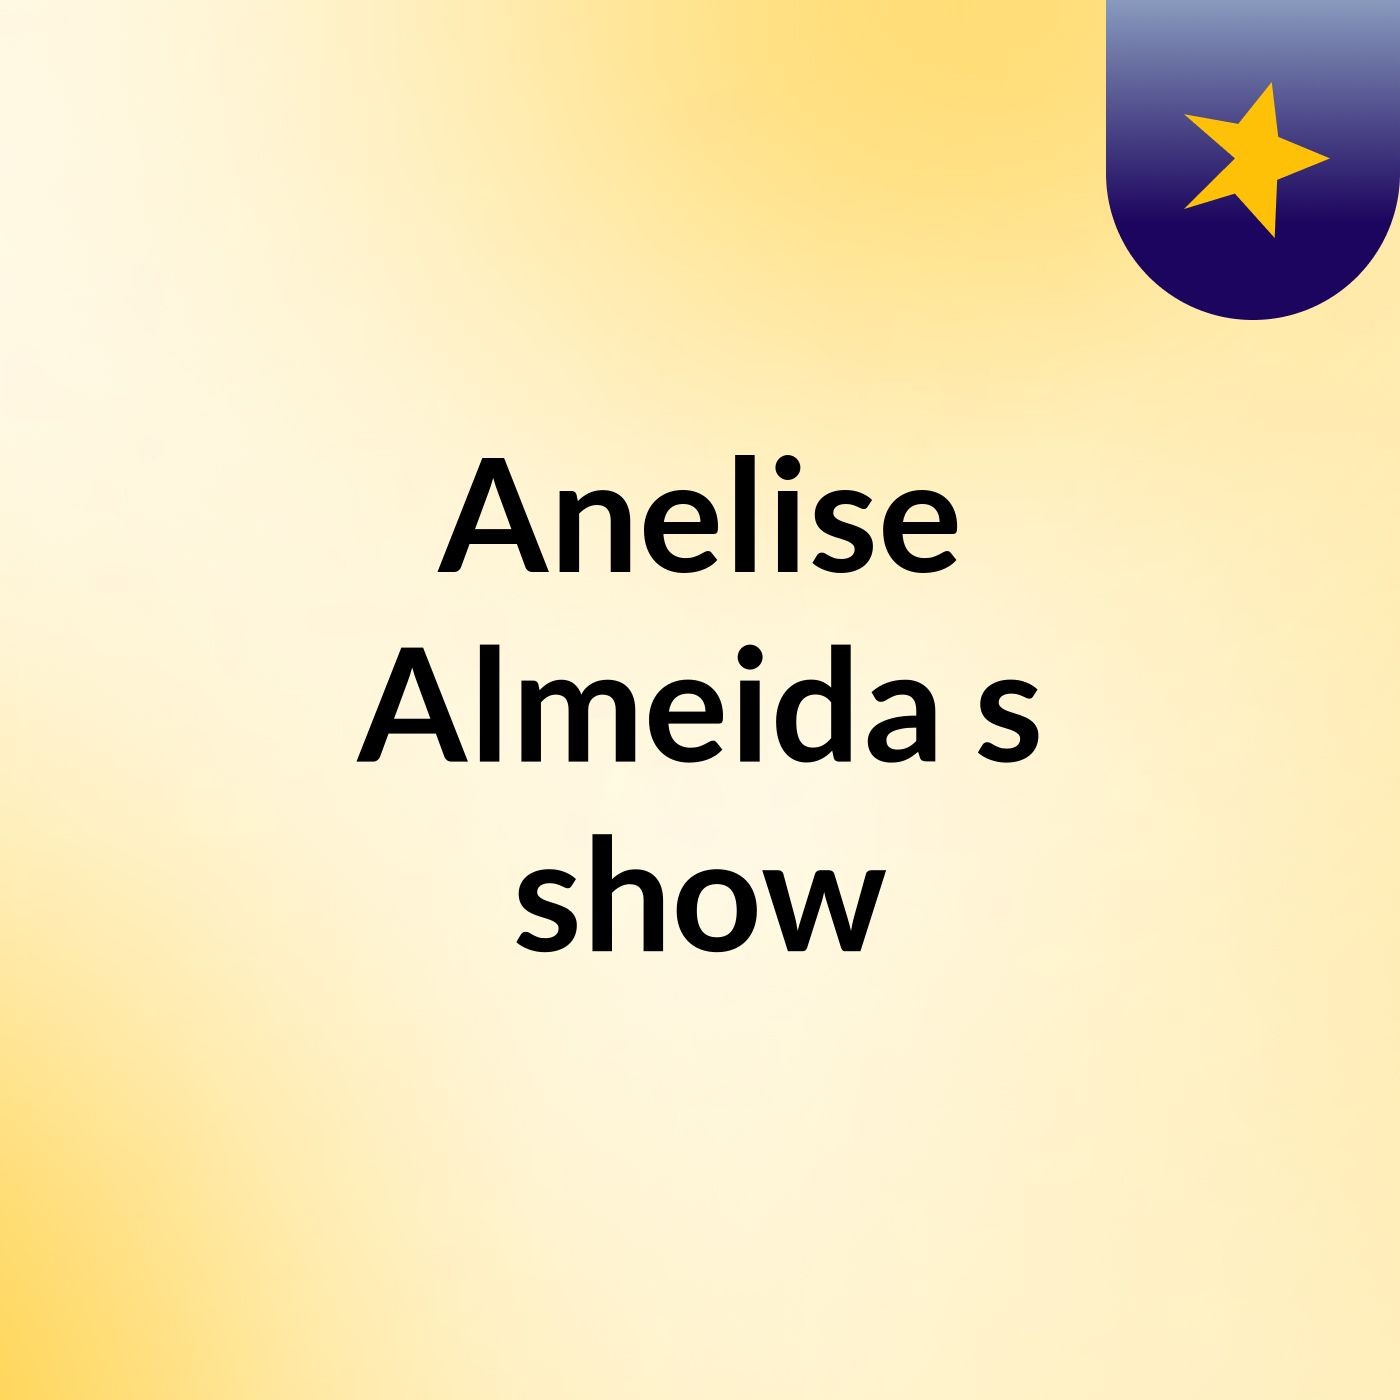 Anelise Almeida's show